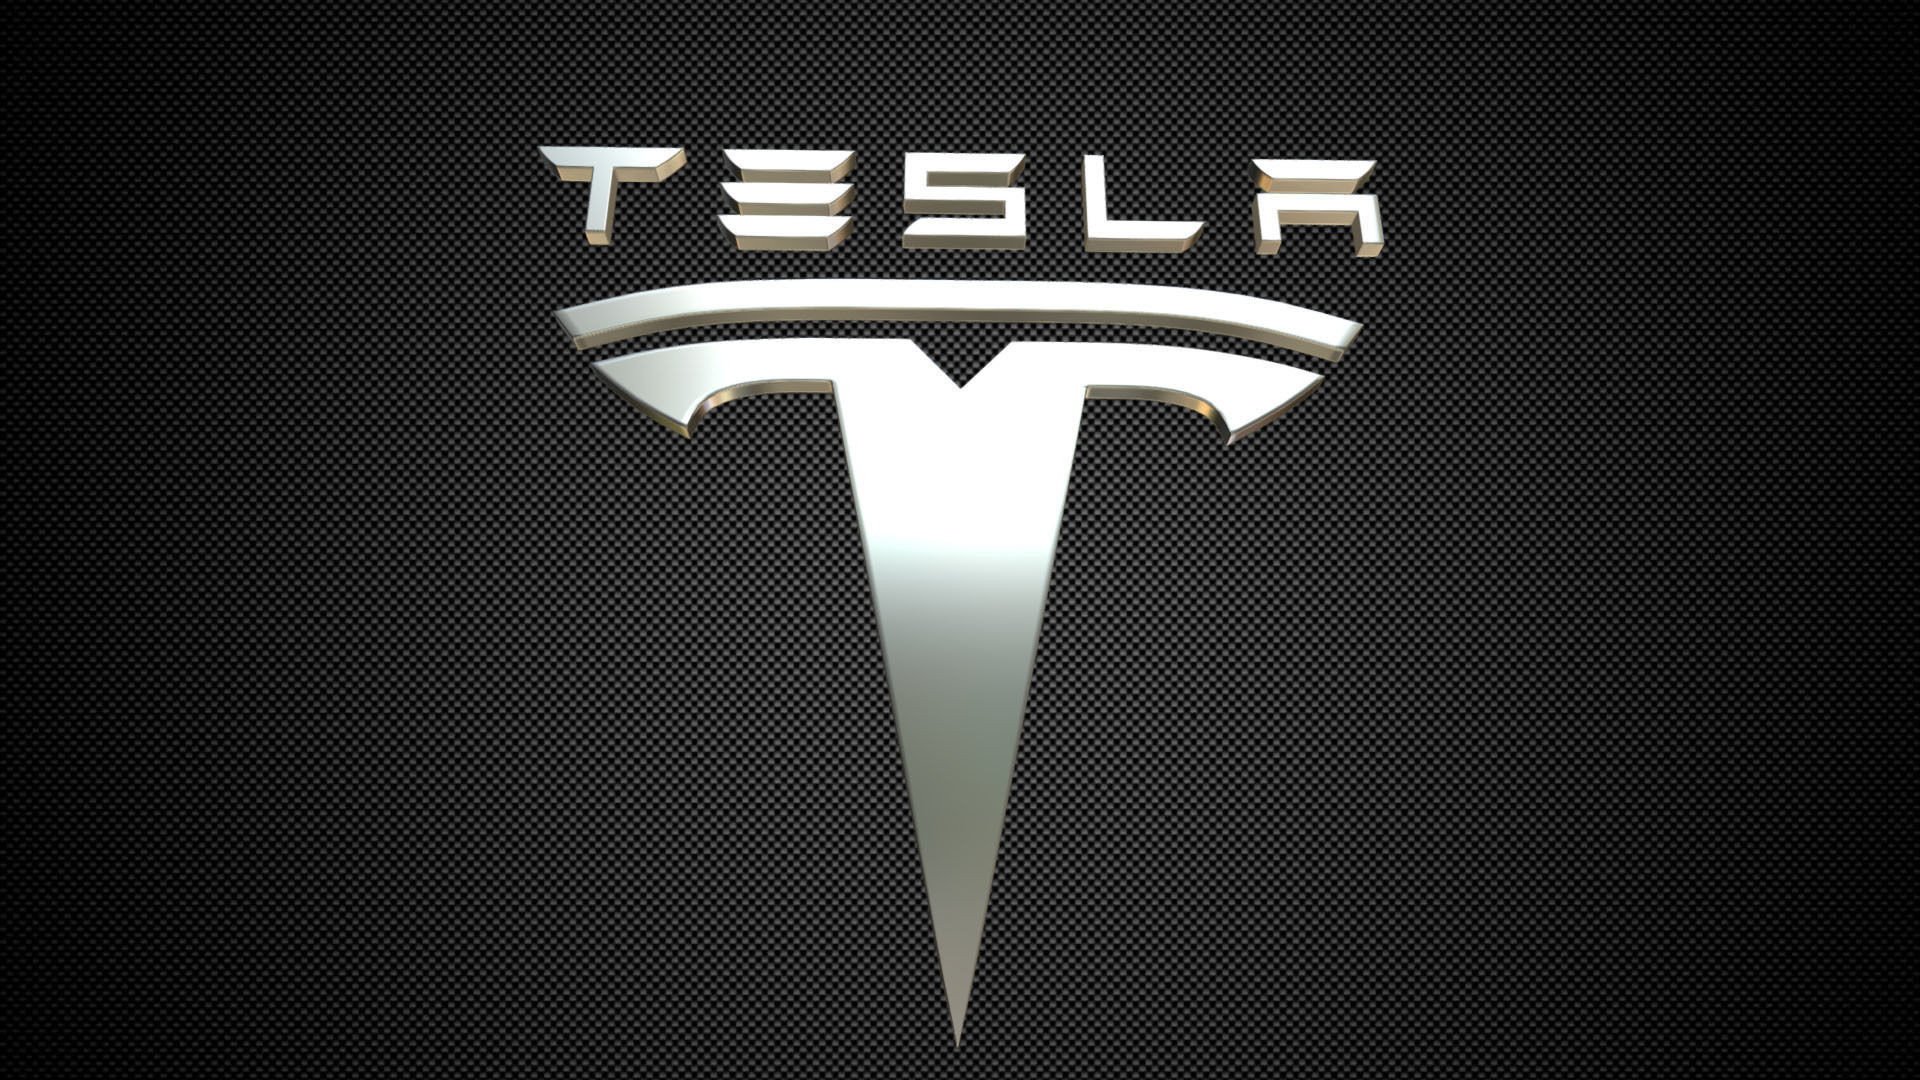 Tesla becomes the leader in the EV market of US